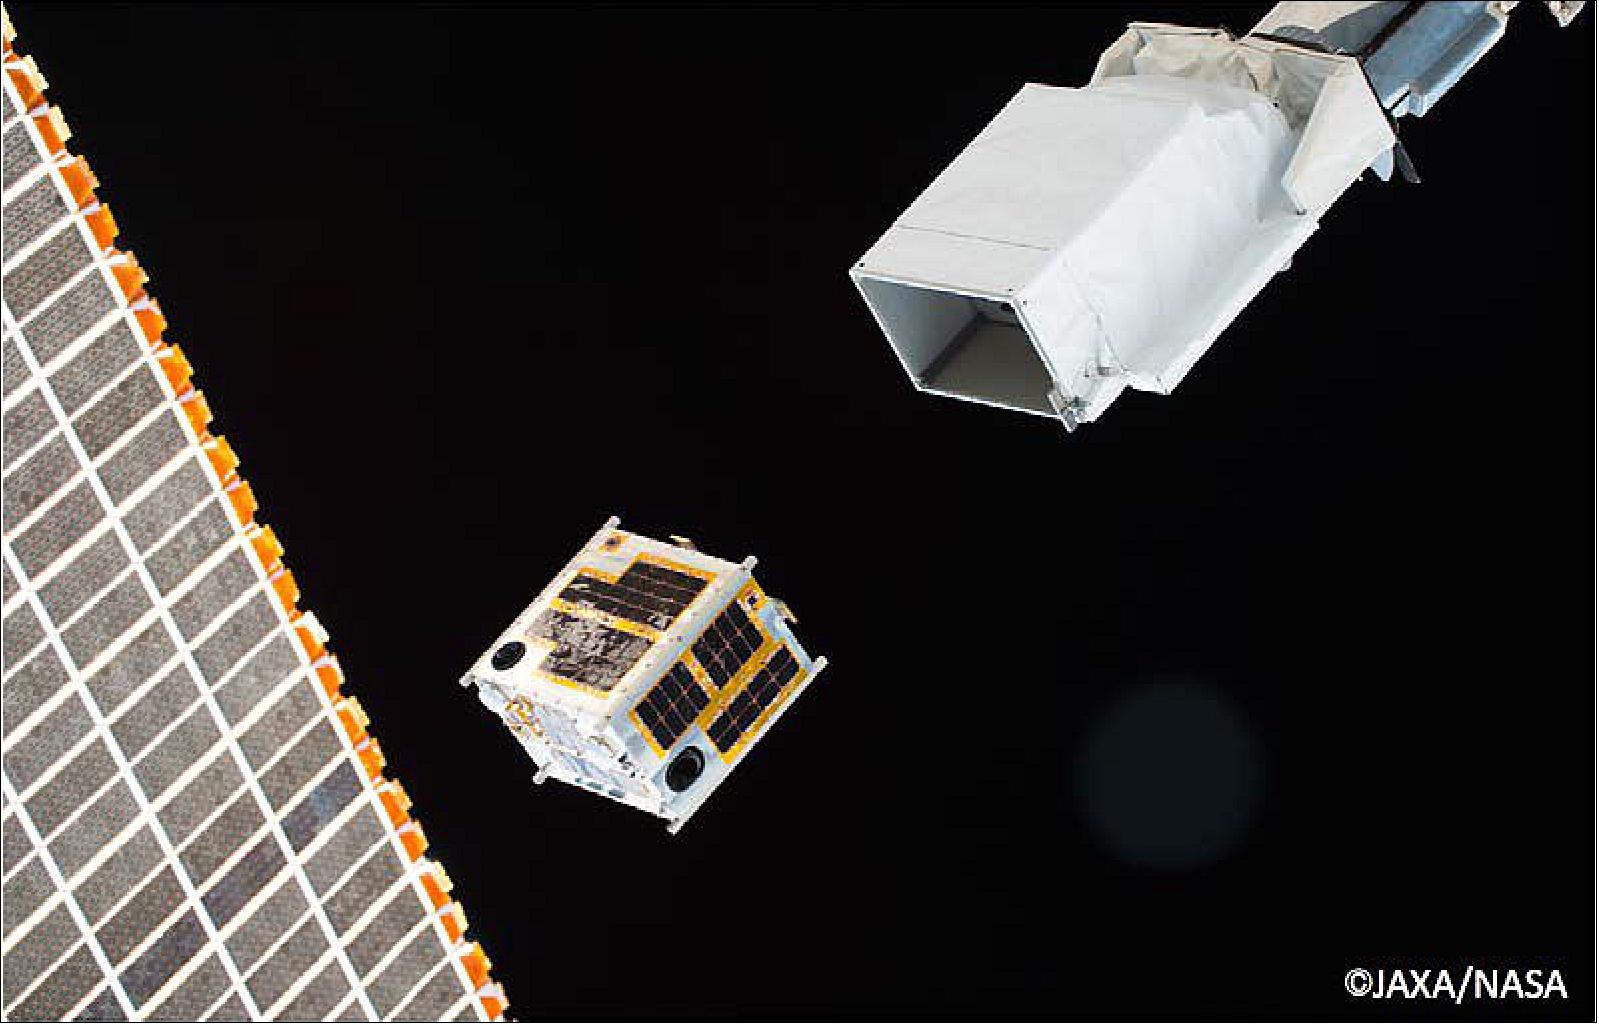 Figure 14: Photo of the DIWATA-1 microsatellite deployment from JEM/Kibo of the ISS (image credit: JAXA,NASA)